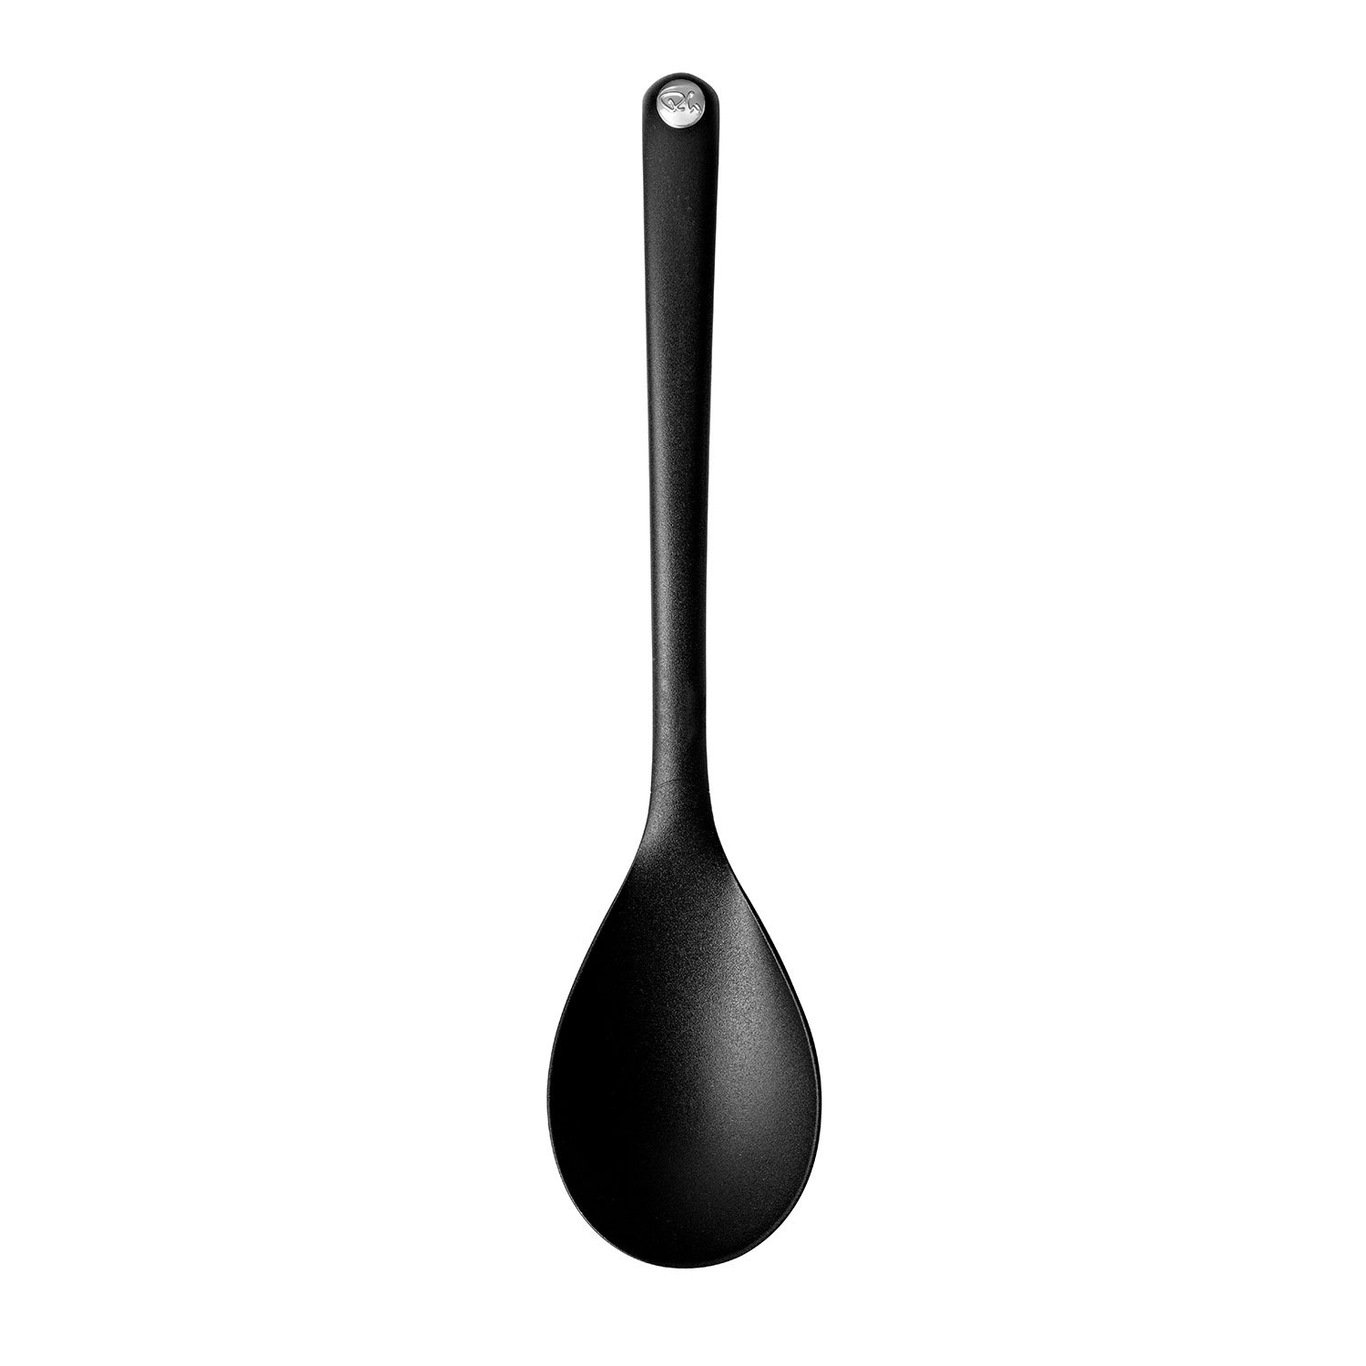 https://royaldesign.com/image/2/robert-welch-signature-serving-spoon-33-cm-0?w=800&quality=80